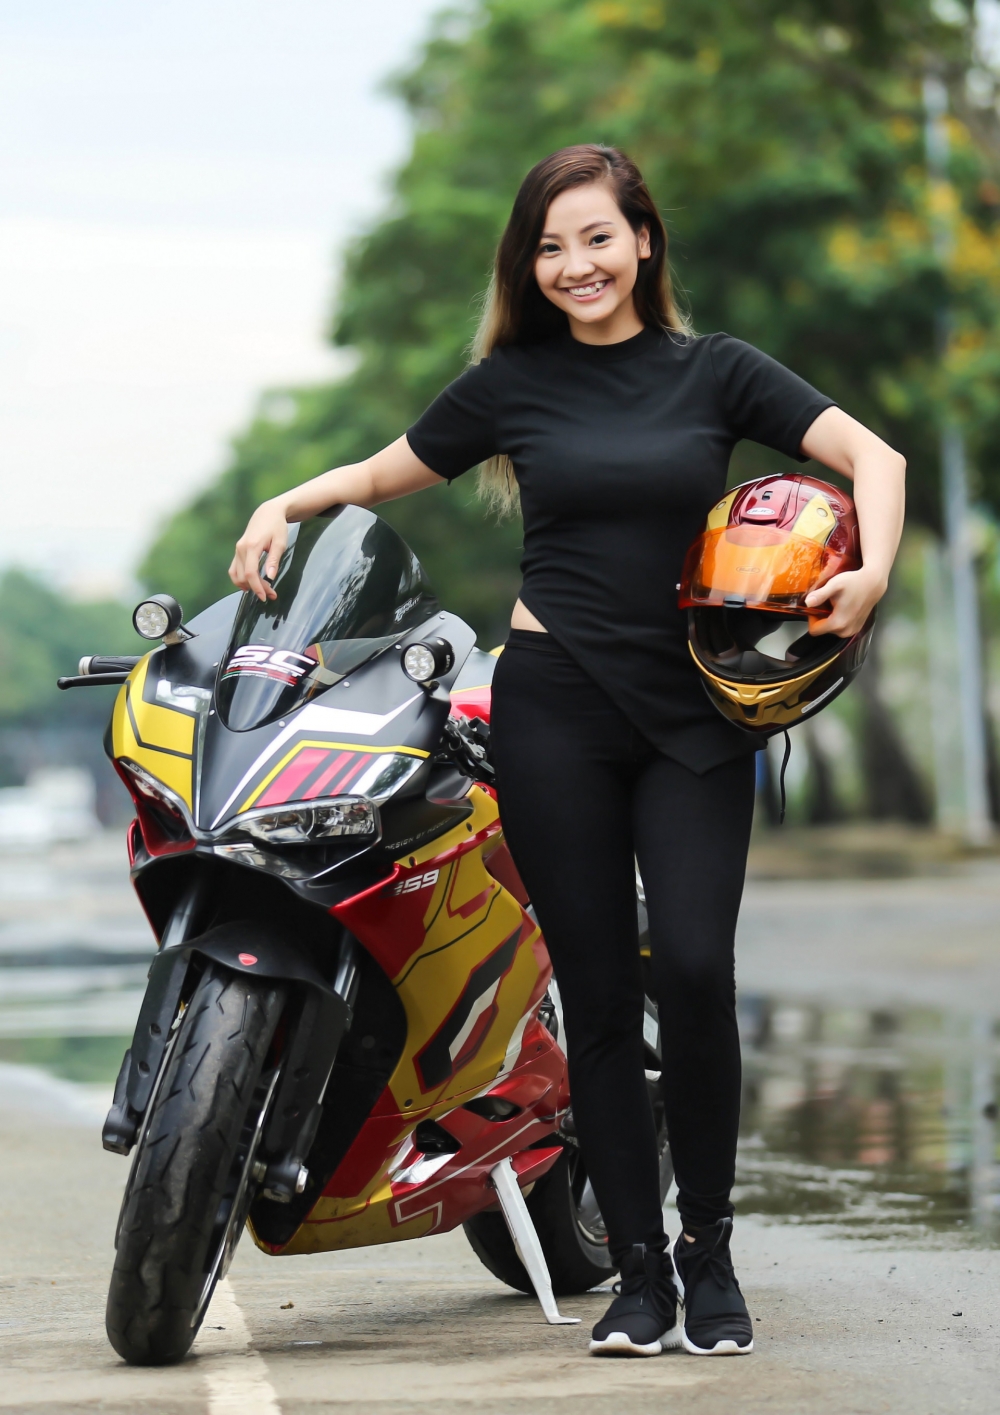 Ducati 959 Panigale phien ban Iron man cua nu biker 9X Sai Thanh - 6